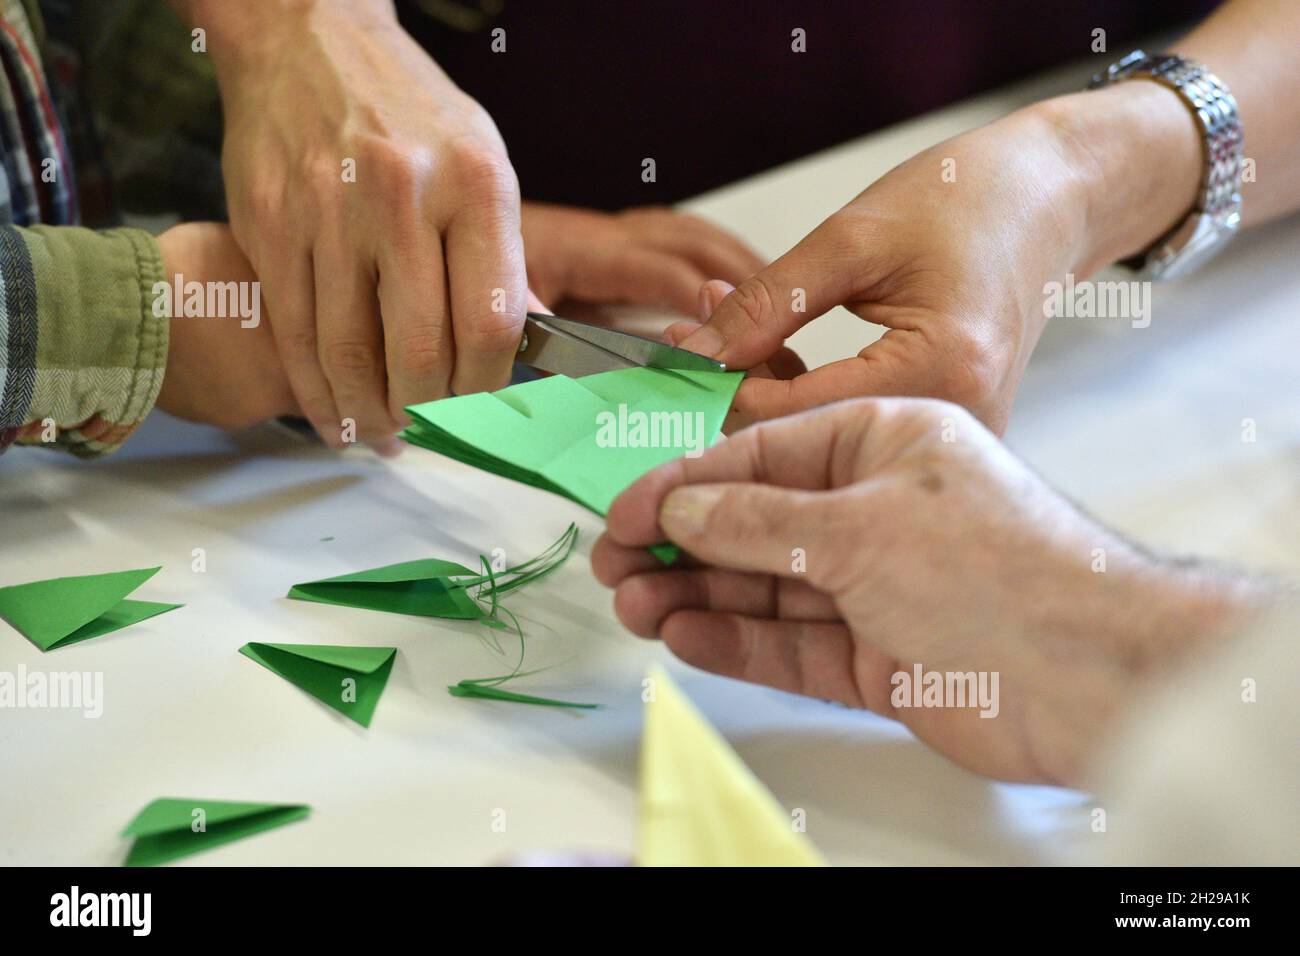 Origami-Falten - Origami folds Stock Photo